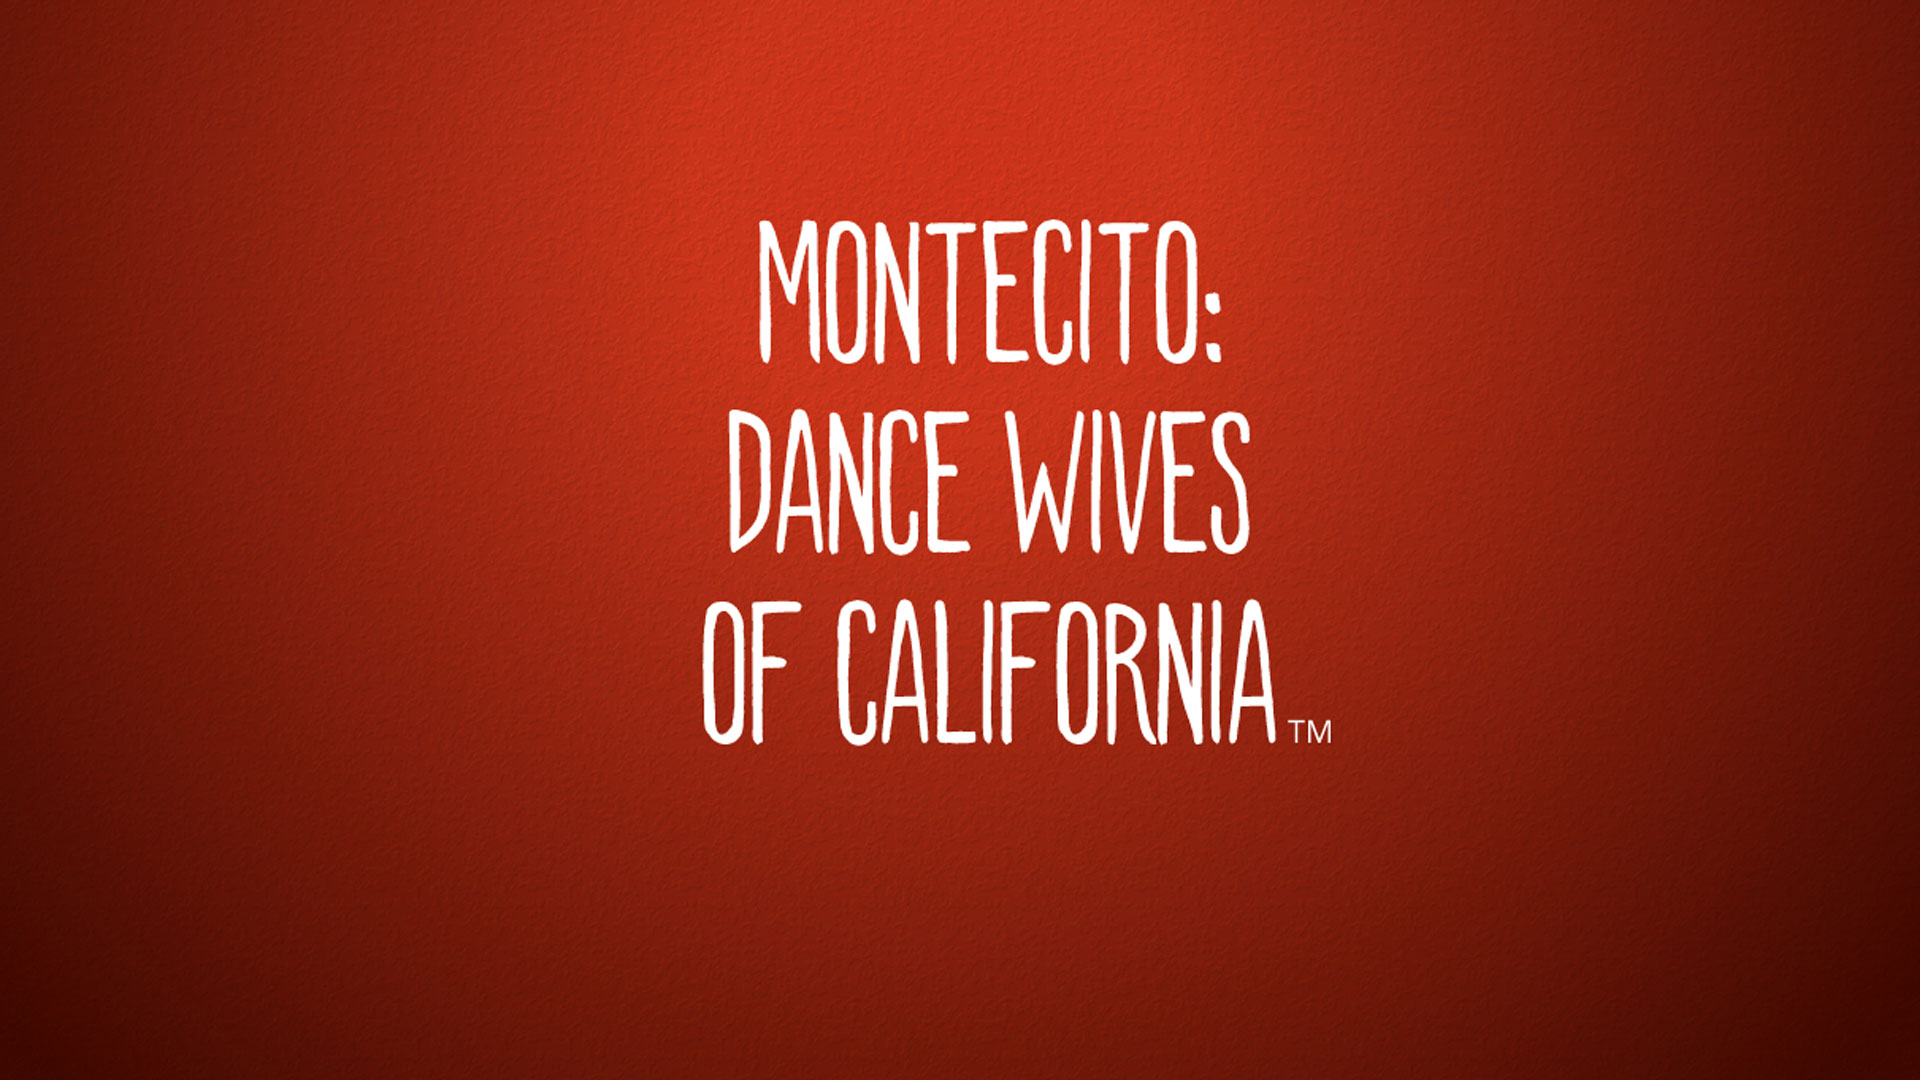 Montecito: Dance Wives of California